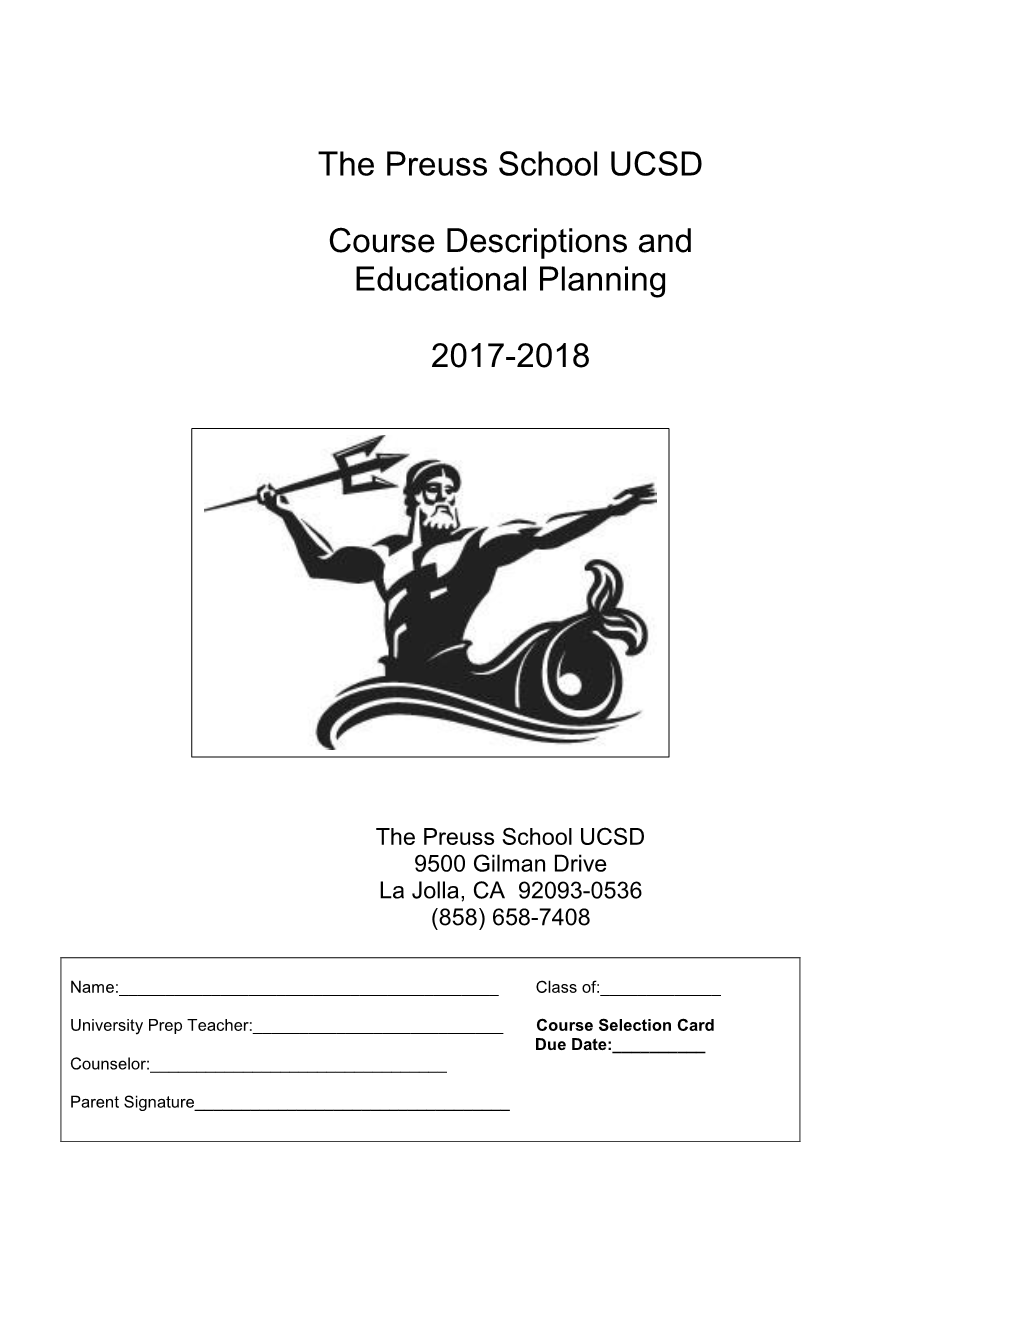 The Preuss School UCSD Course Descriptions and Educational